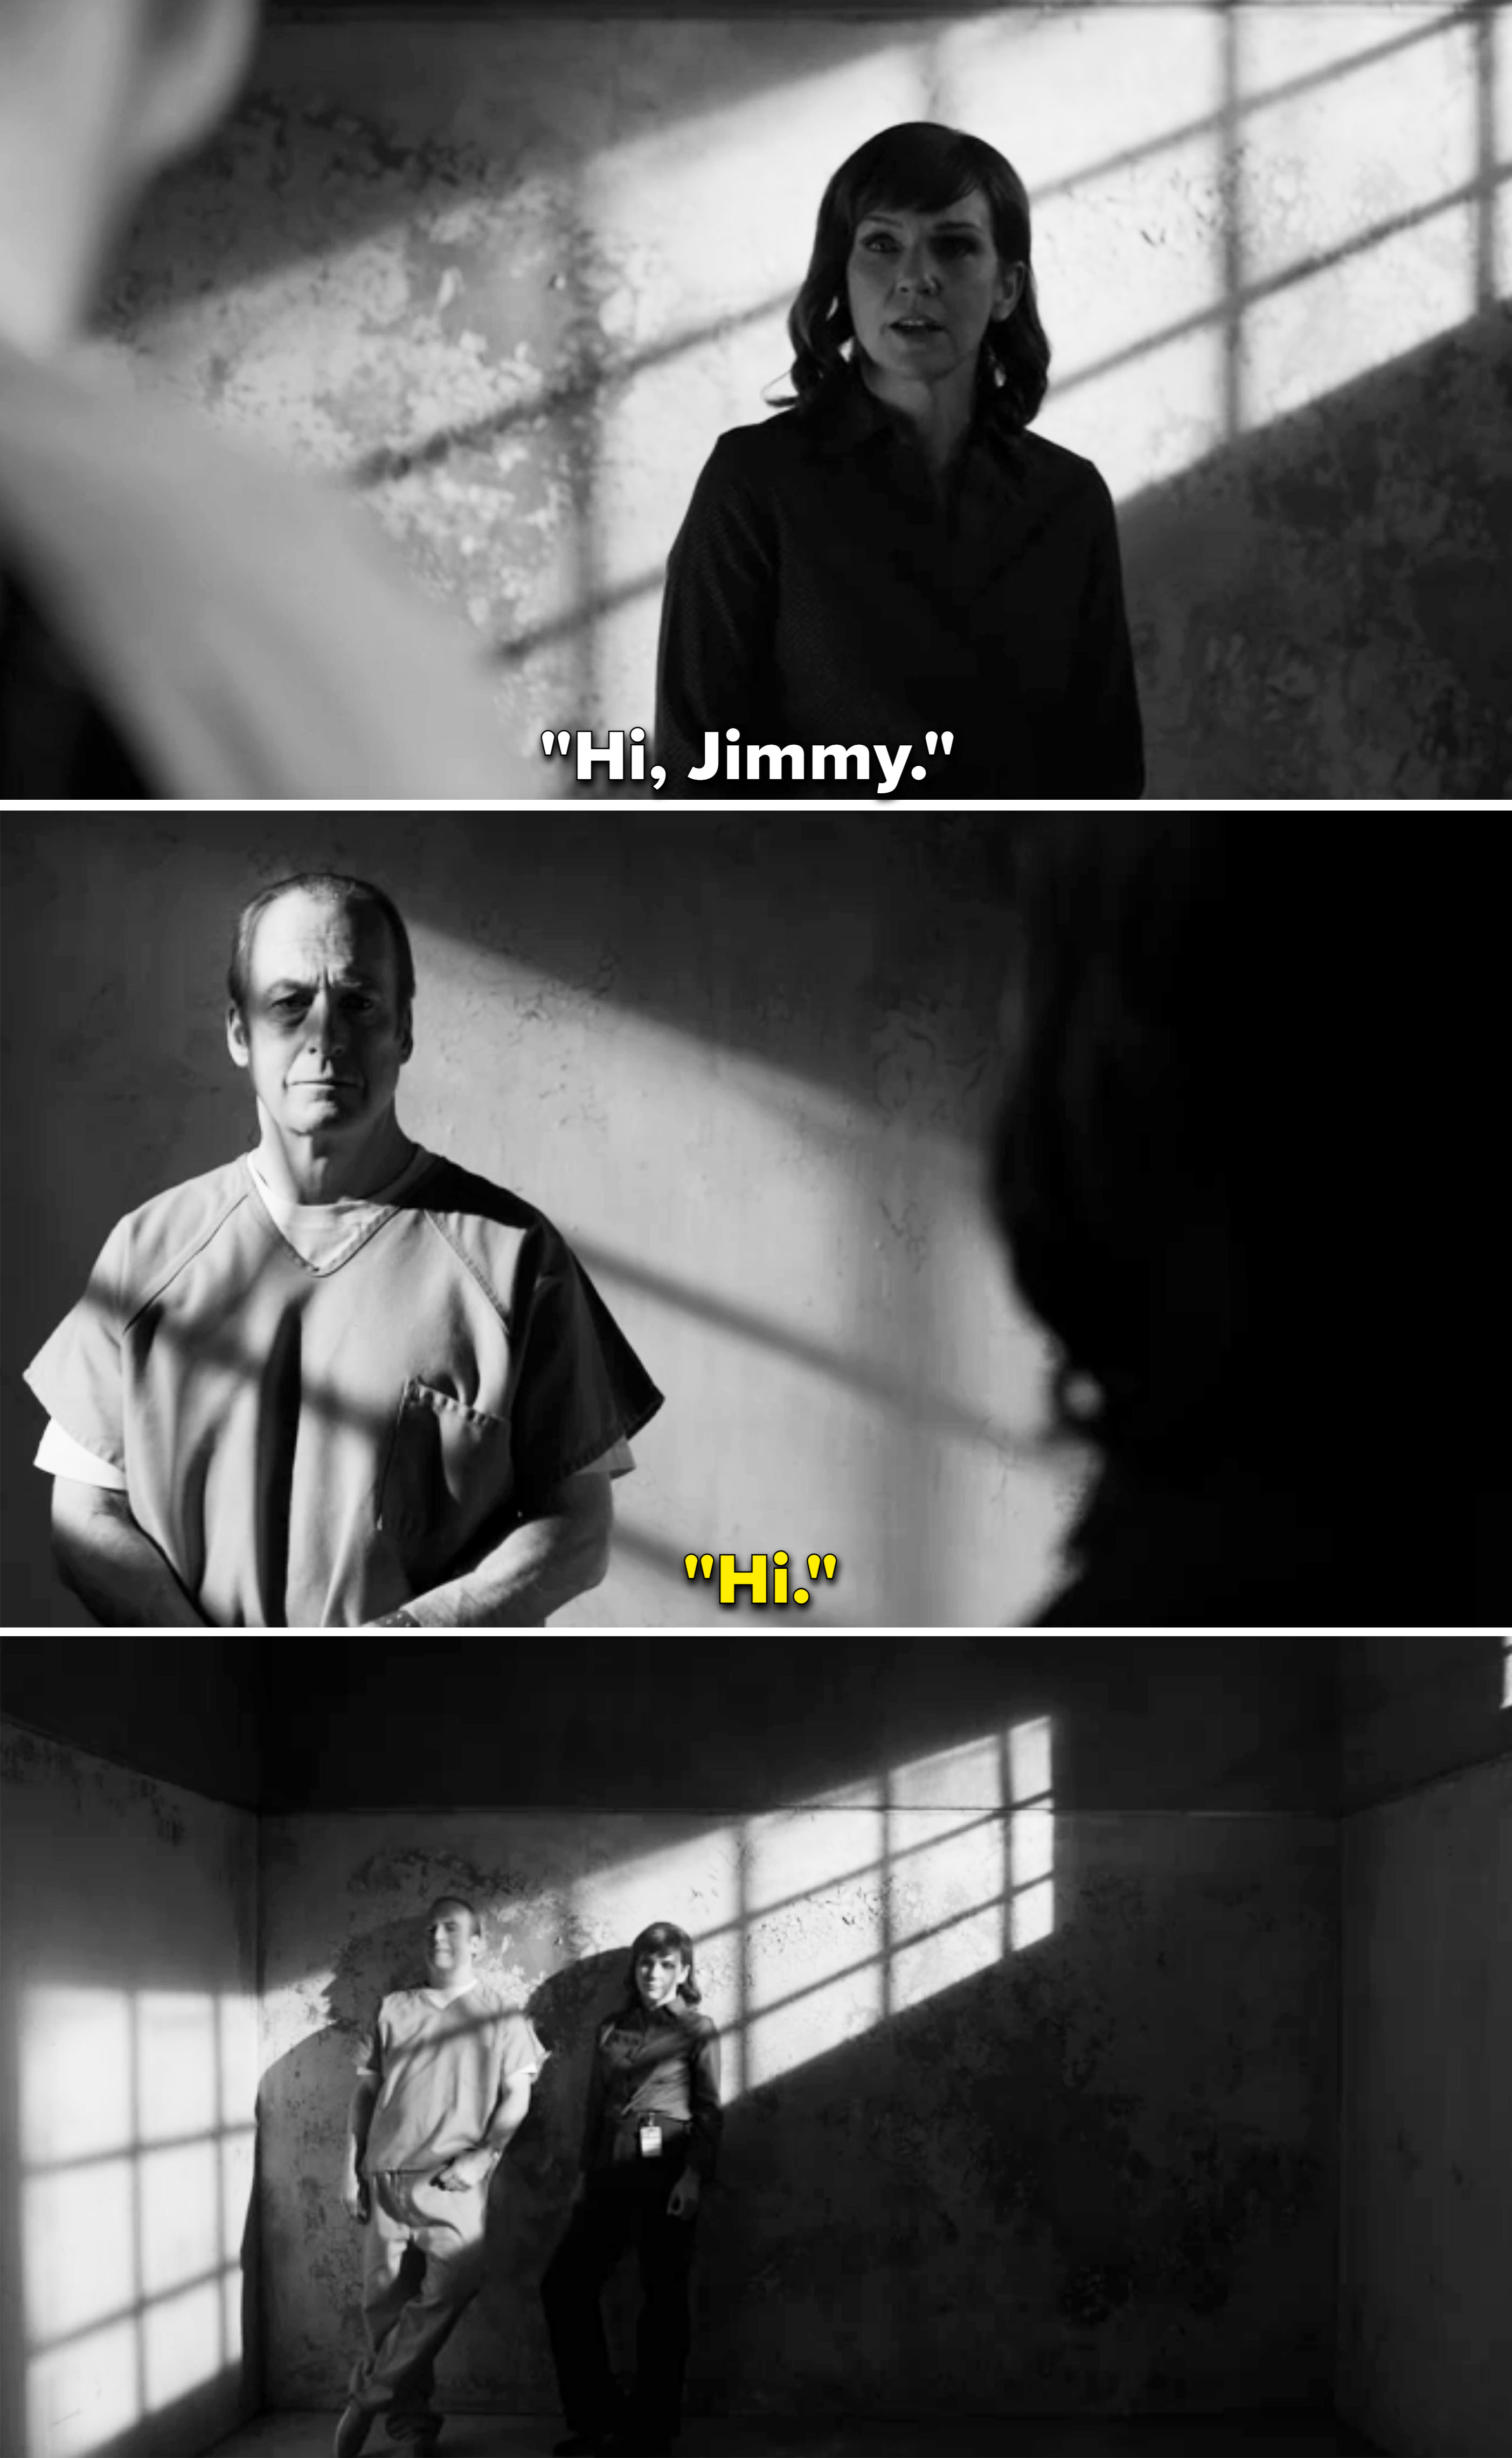 Kim visiting Jimmy in jail